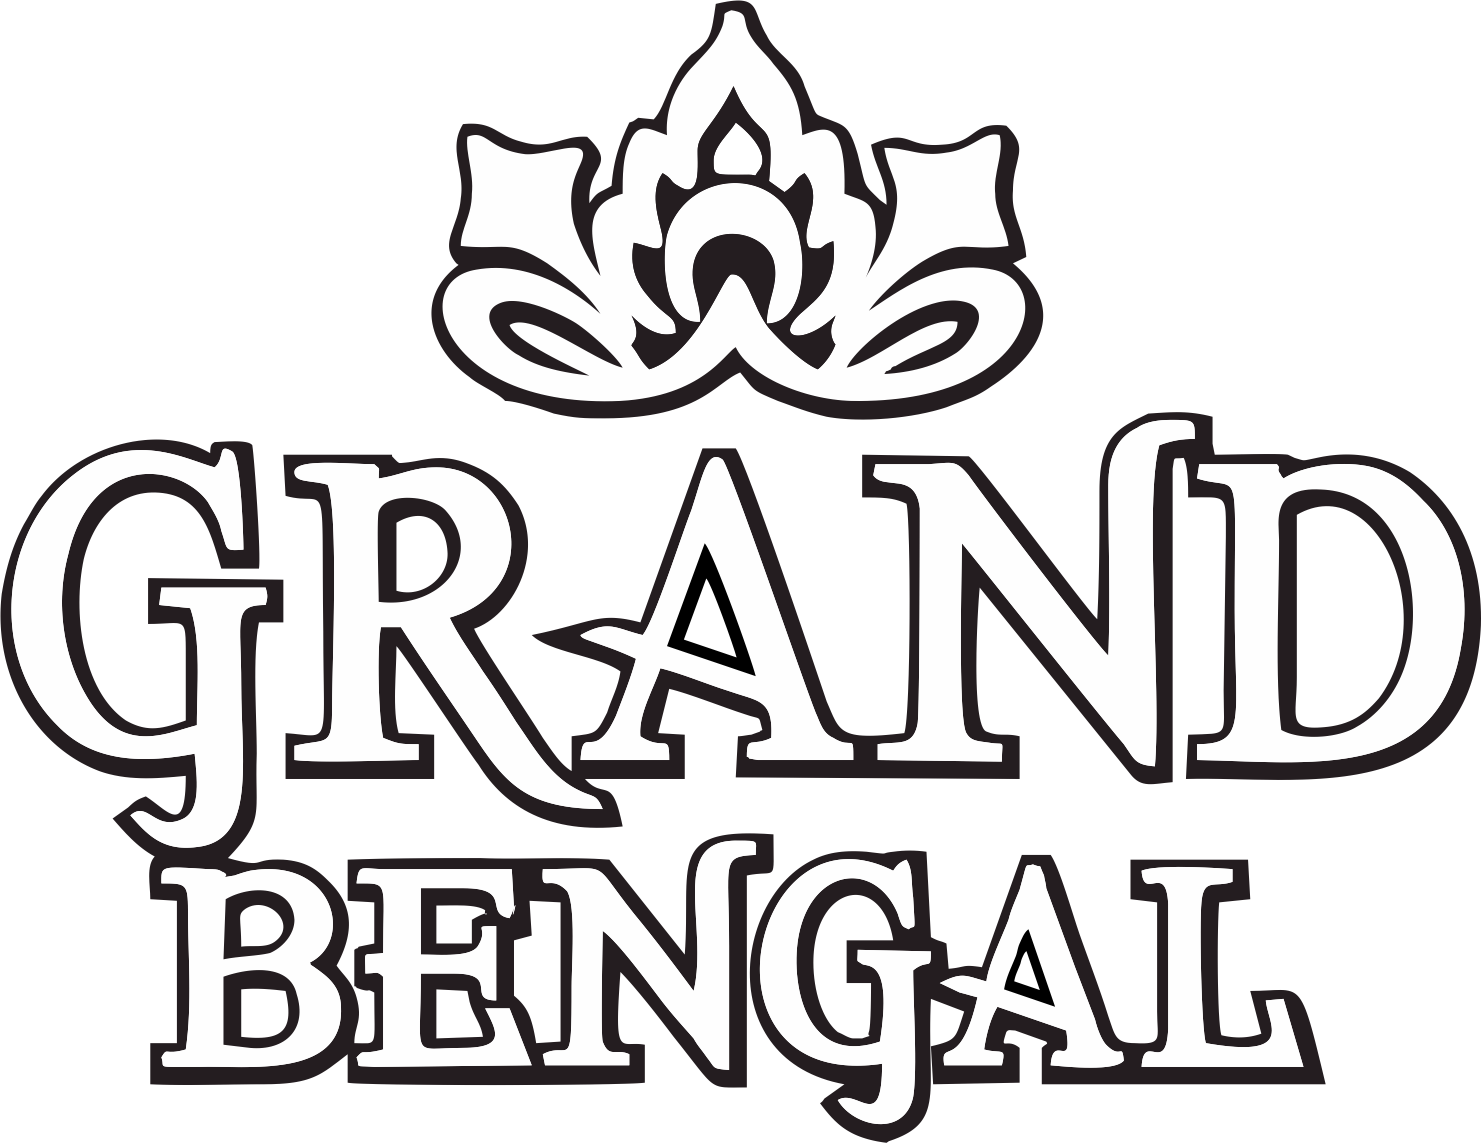 GrandBenagl Logo1